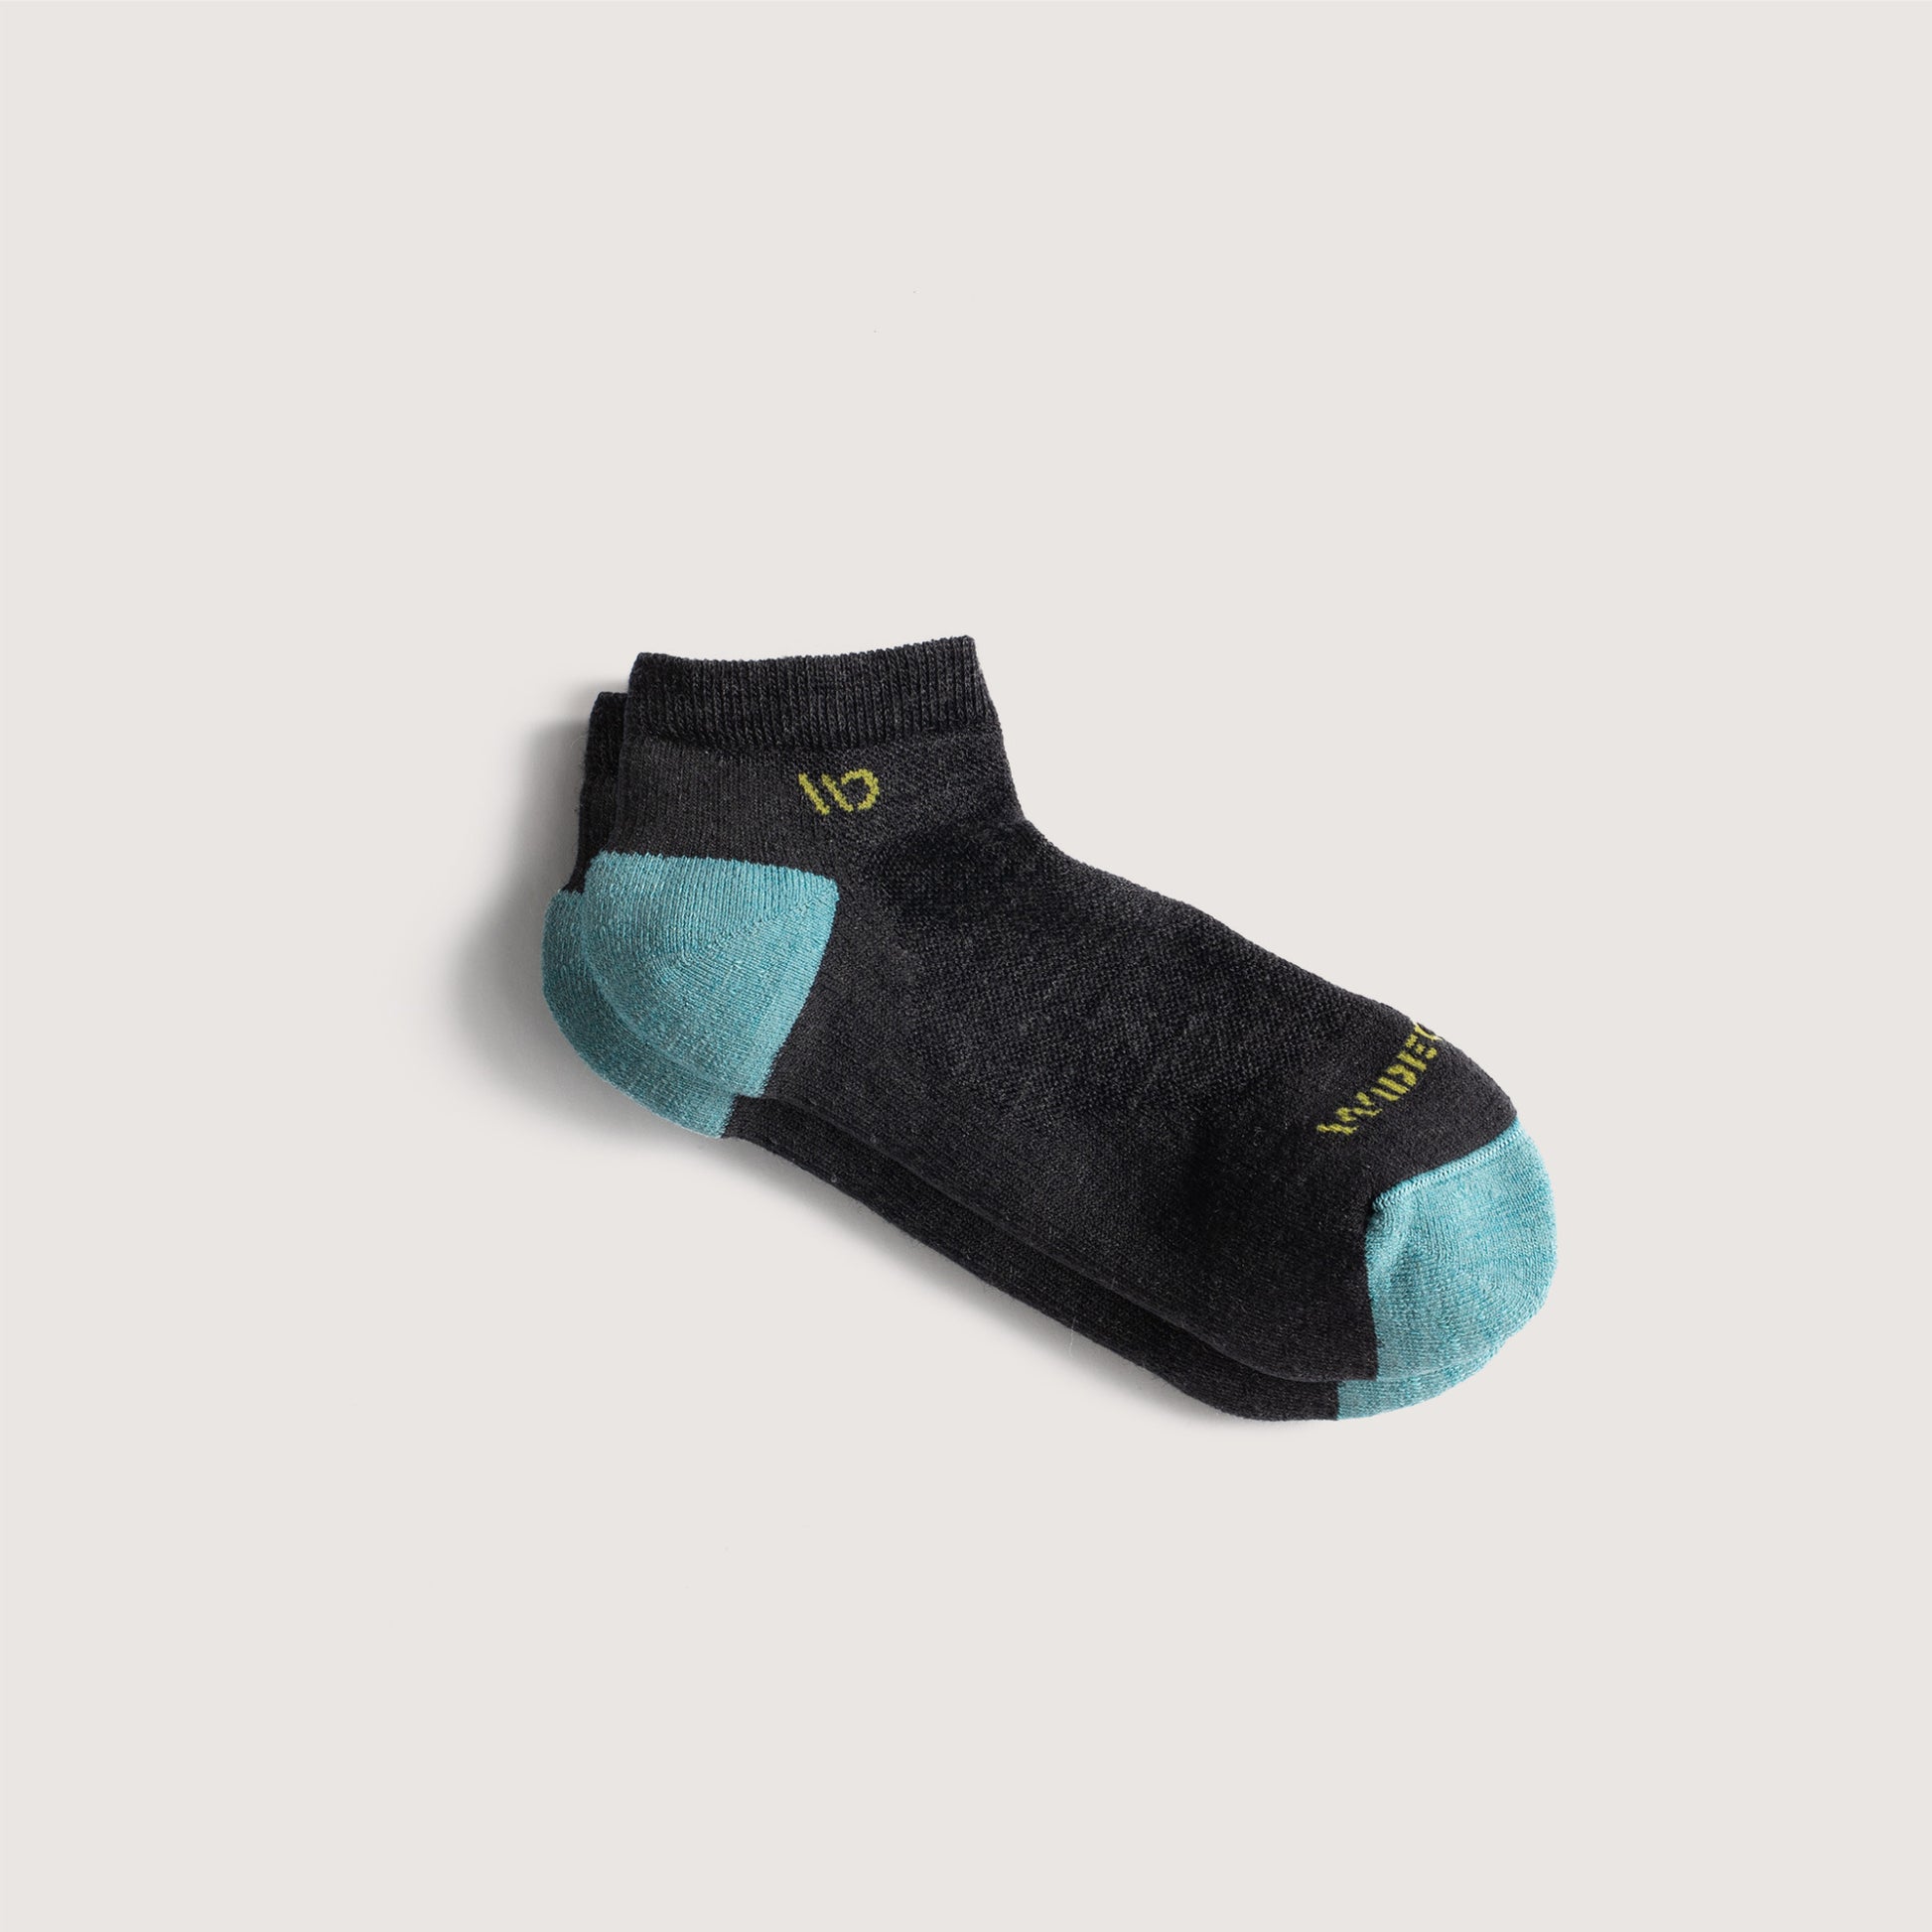 Flat socks featuring aqua heel/toe, yellow logo, and charcoal body --Charcoal